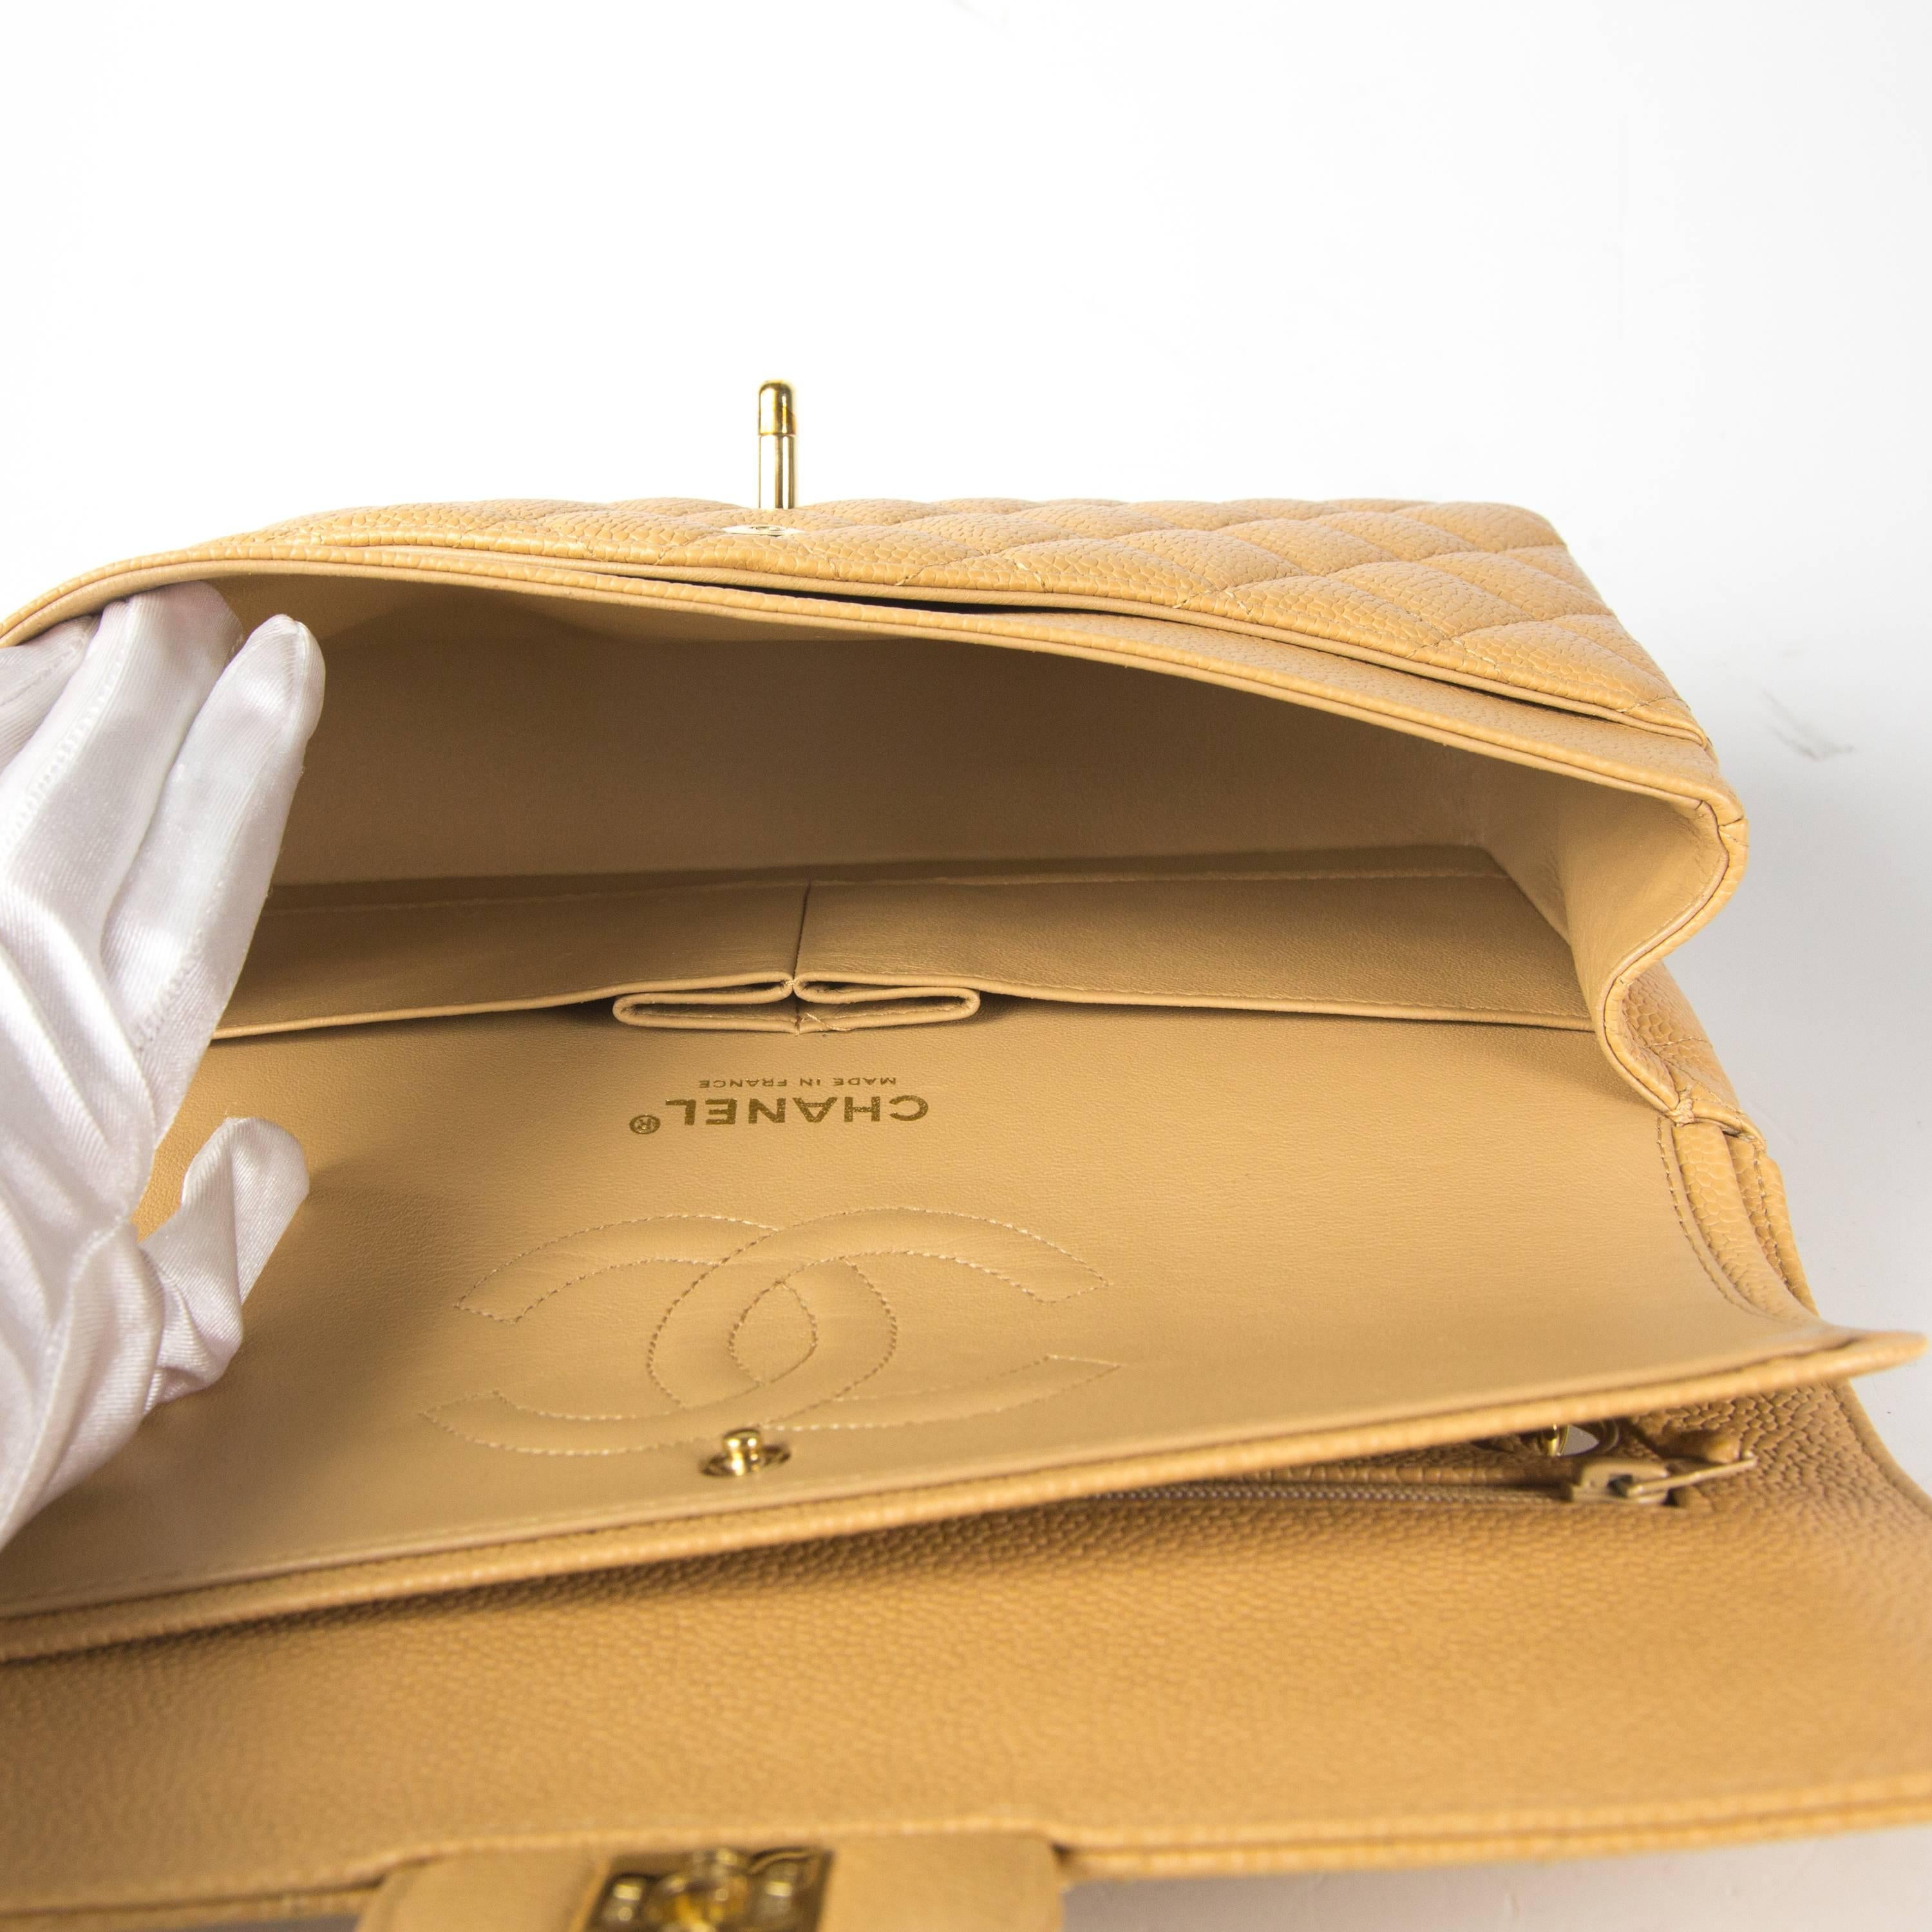 Women's Chanel Caviar Double Flap Bag - Tan Beige Quilted Leather Medium CC Gold Handbag